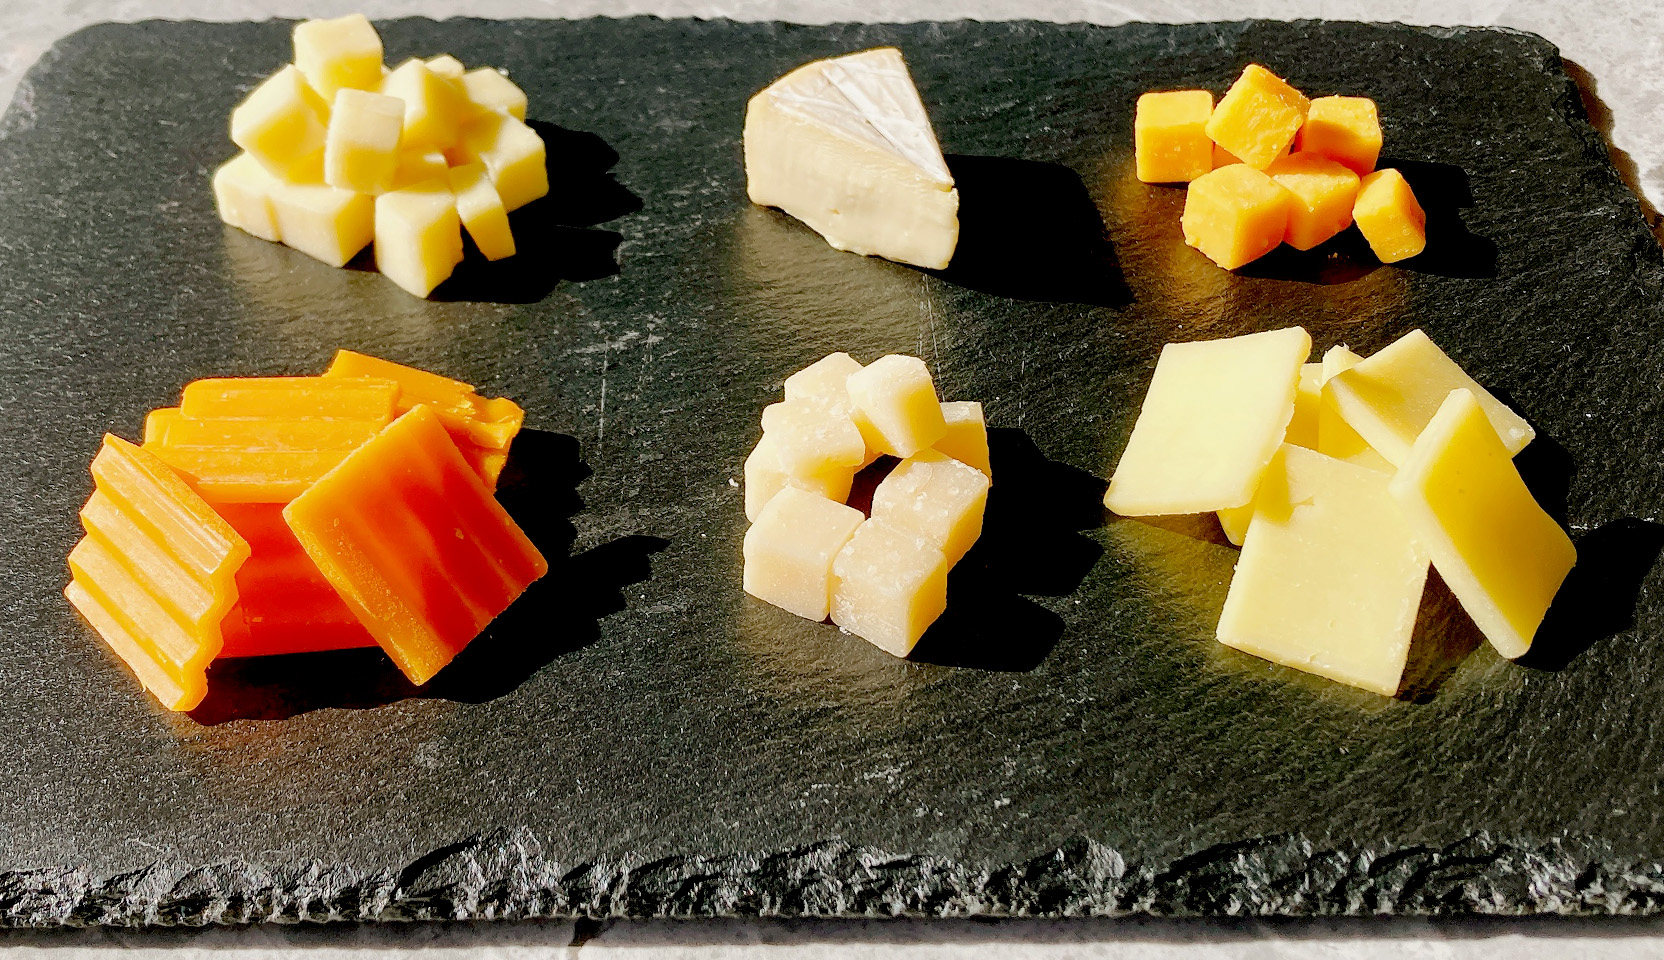 Assorted cheese platter